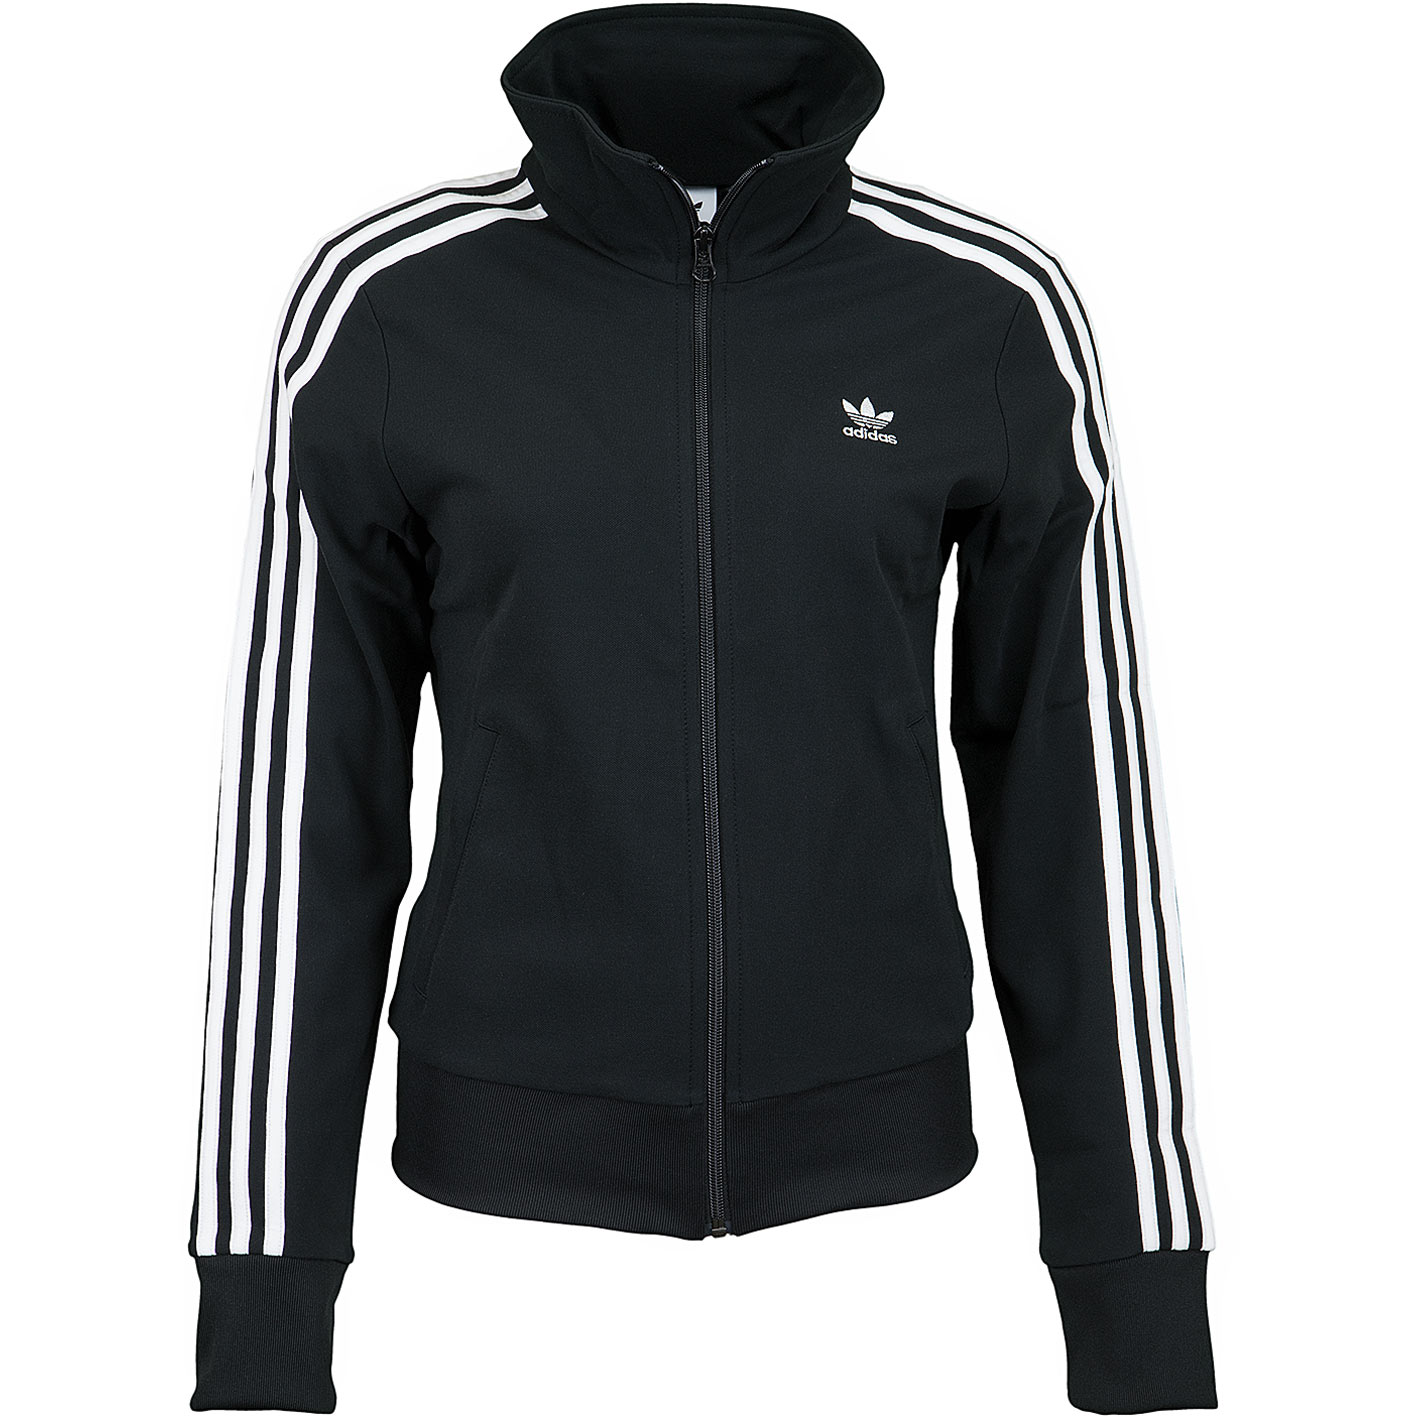 ☆ Adidas Originals Damen Trainingsjacke TT schwarz/weiß - hier bestellen!